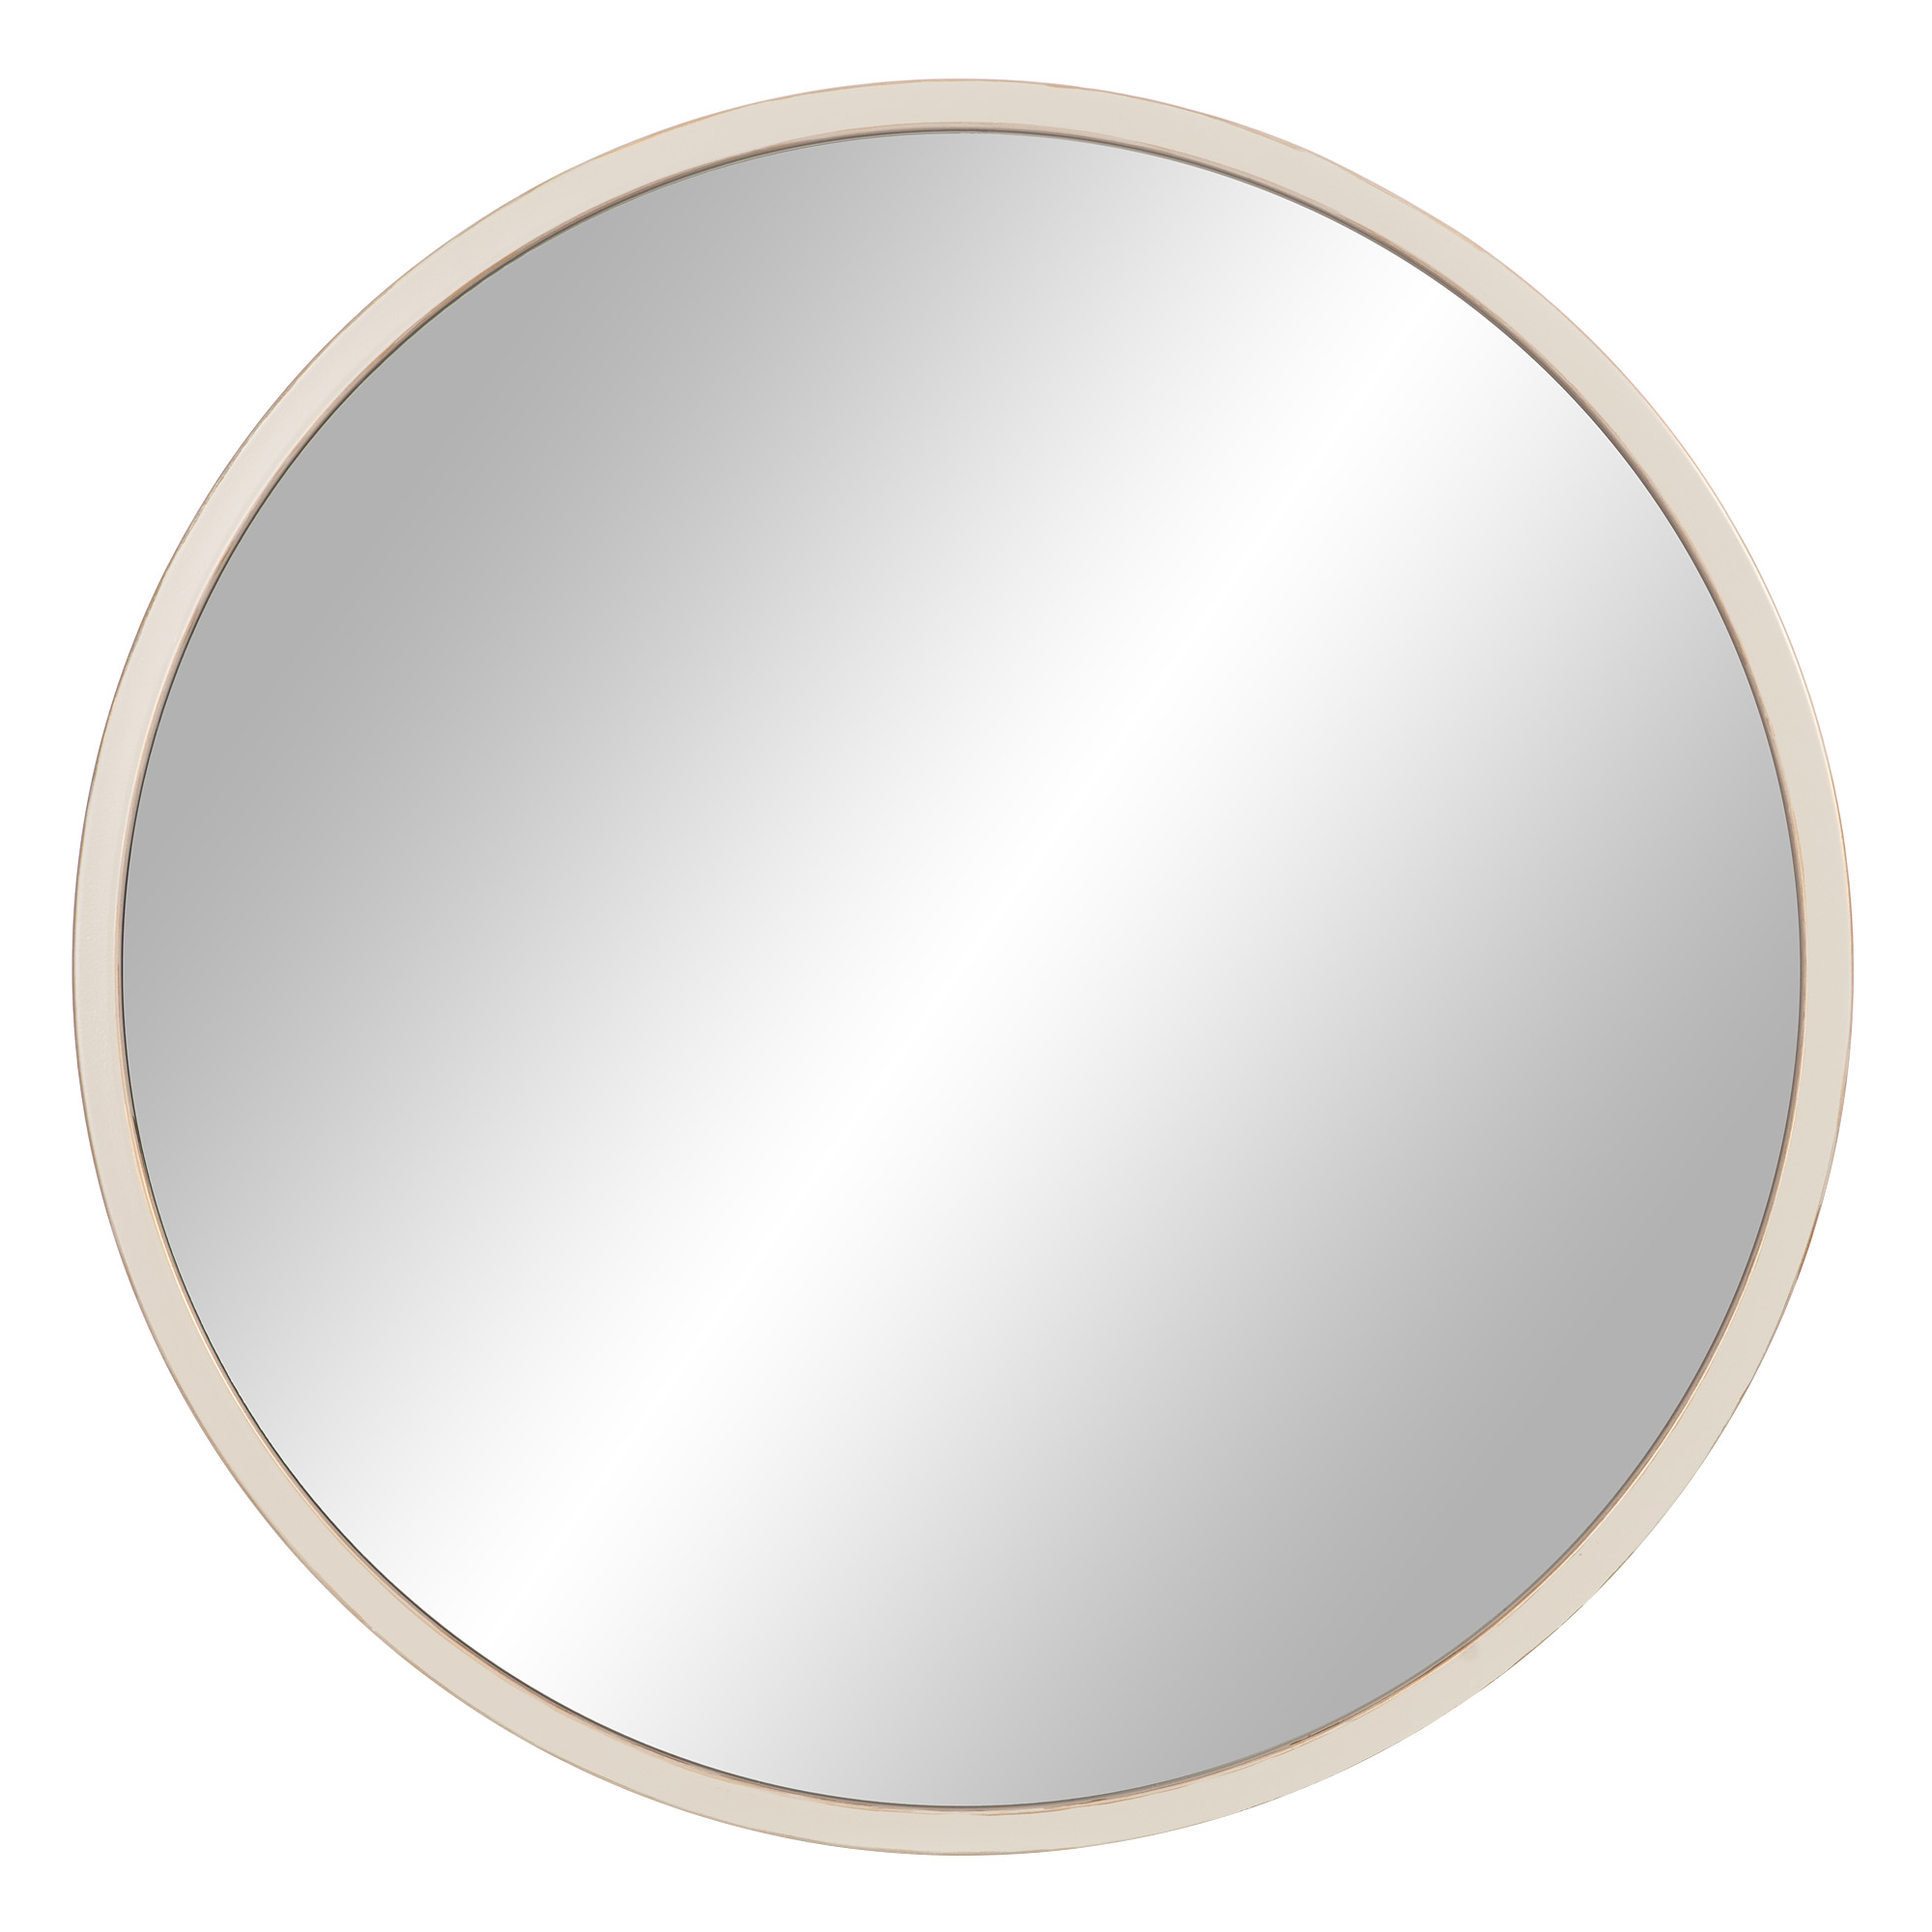 Minimalist Round Metal Frame Wall Mount Mirror, Distressed Cream & Gold, 30" x 30" - image 1 of 5